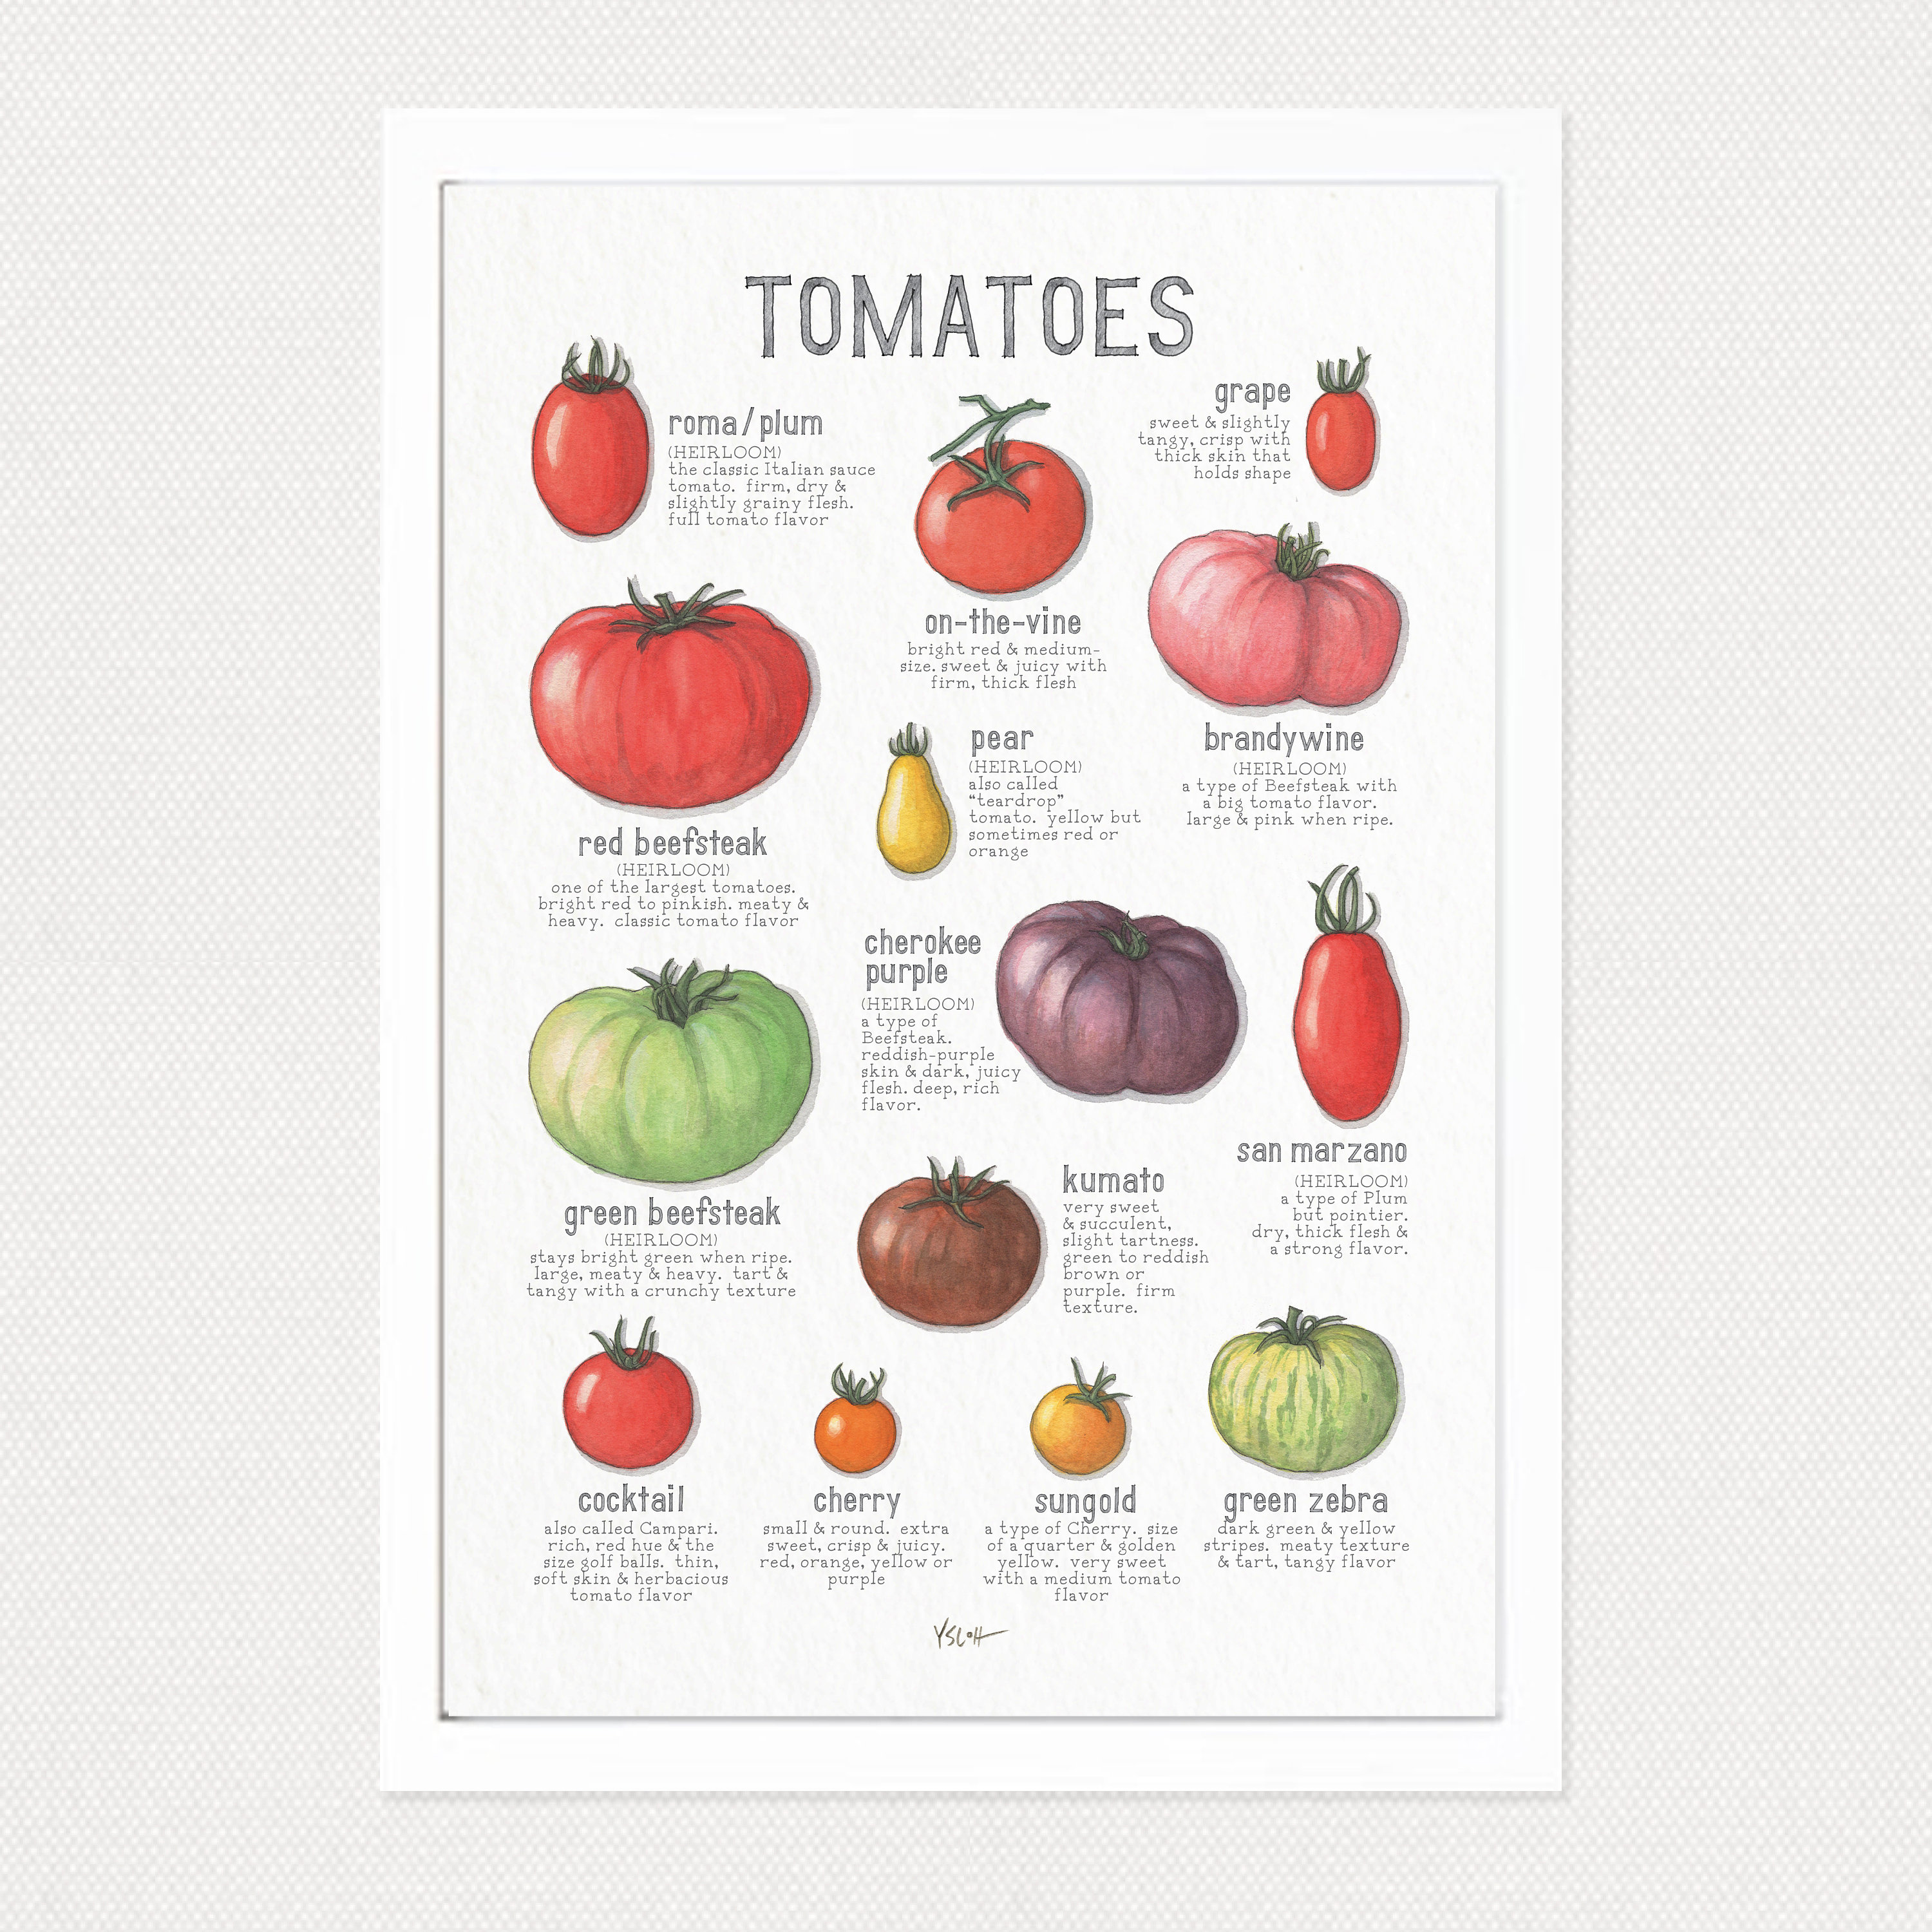 Tomatoes / Poster / Food / Vegetables / Fruit / Illustrations 